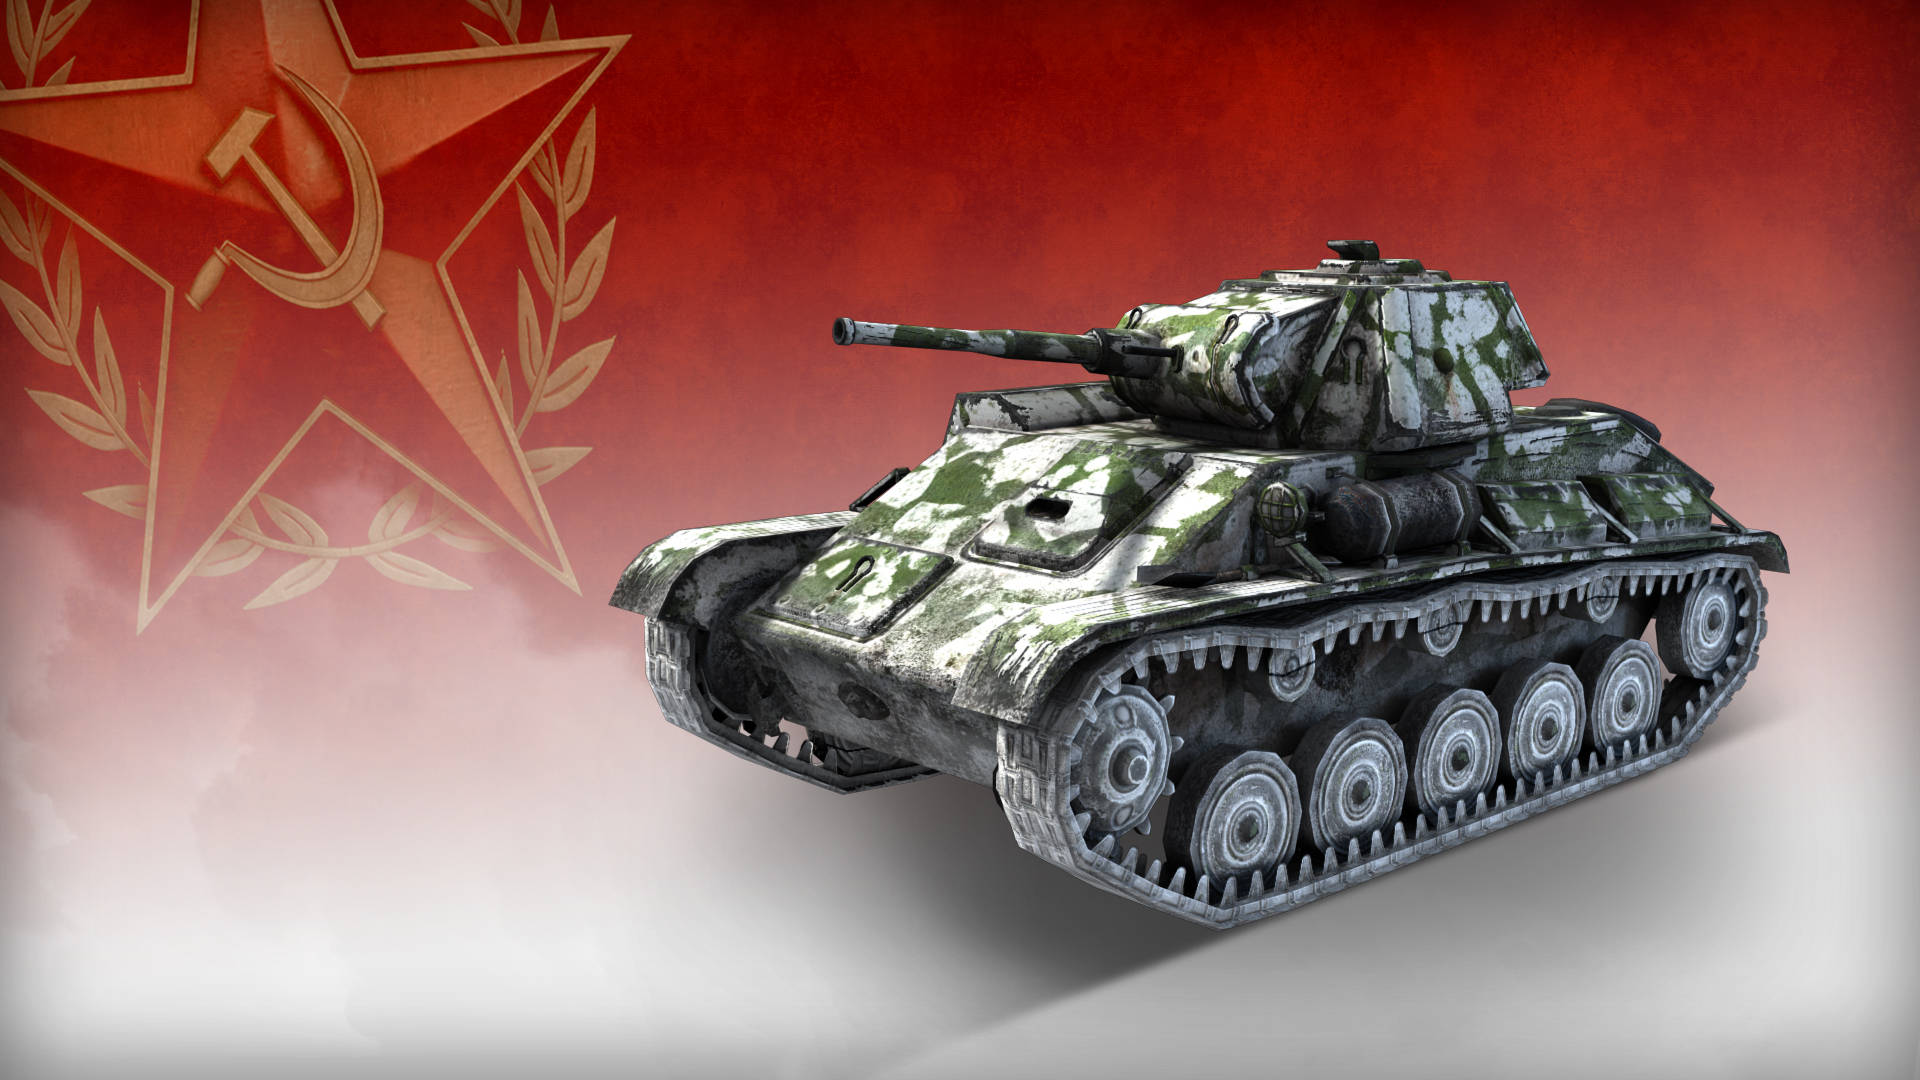 Company of Heroes 2 SU-76M Tank Wallpaper